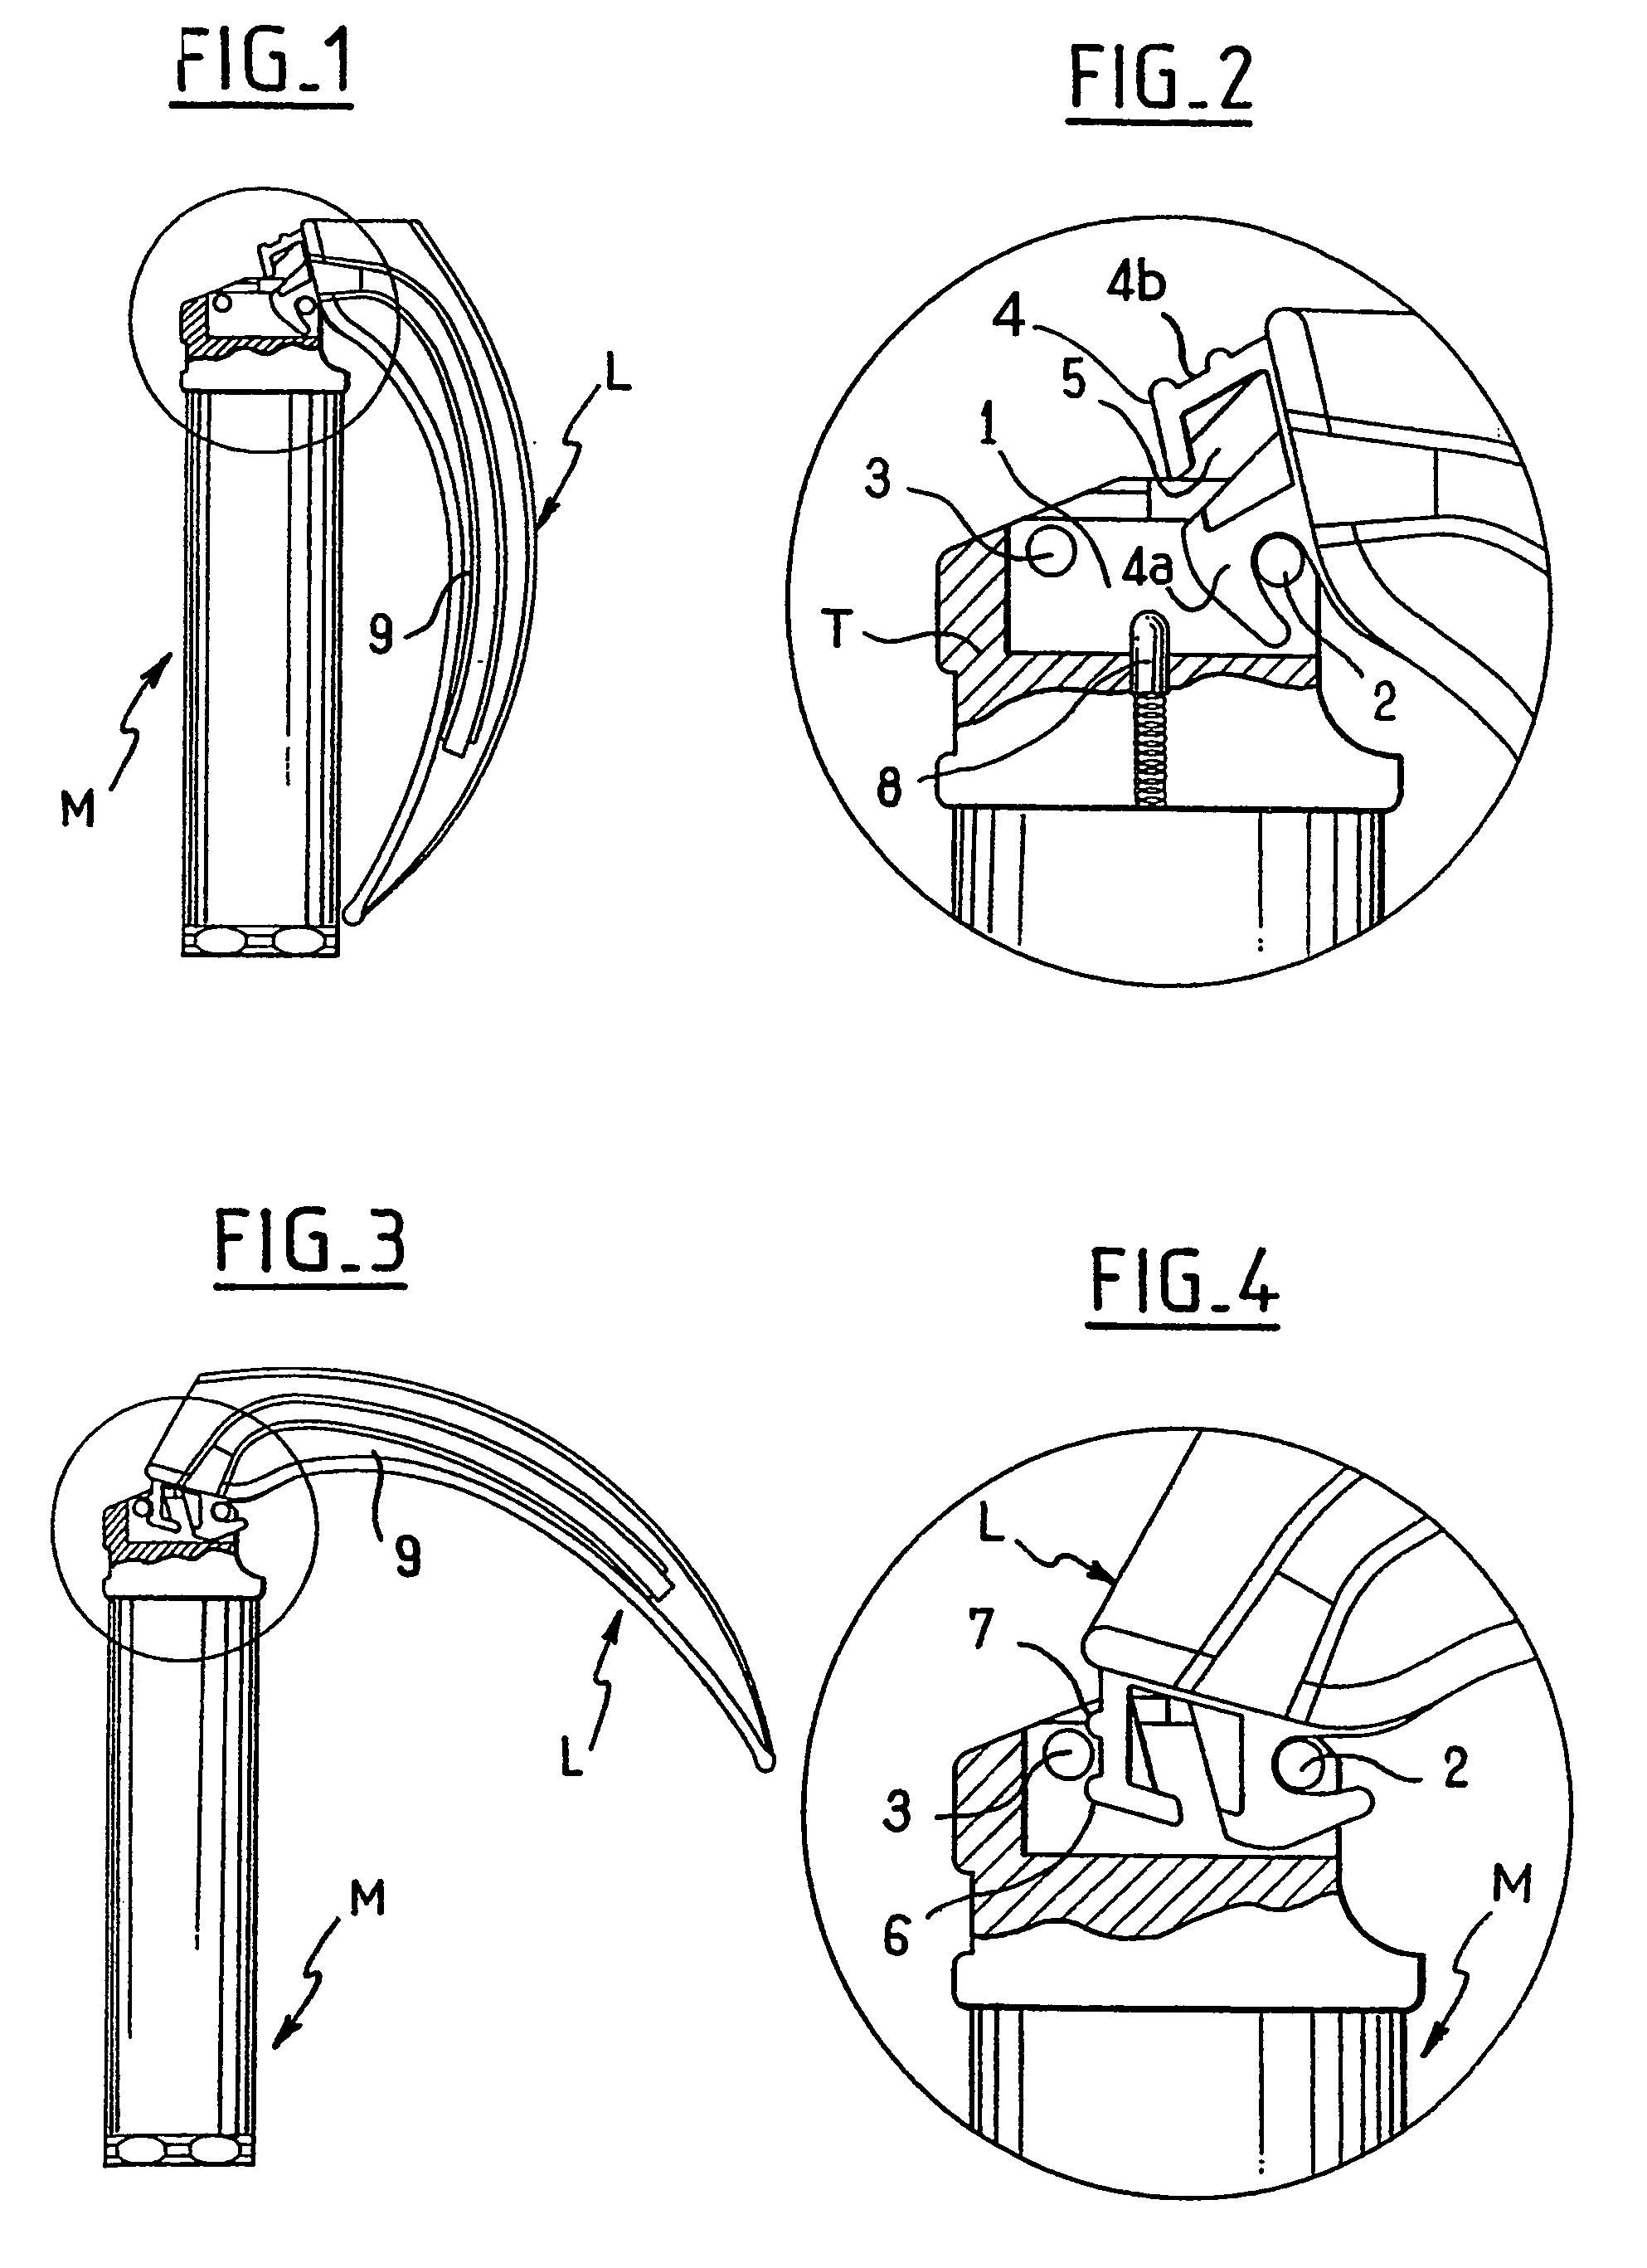 Laryngoscope blade and handle